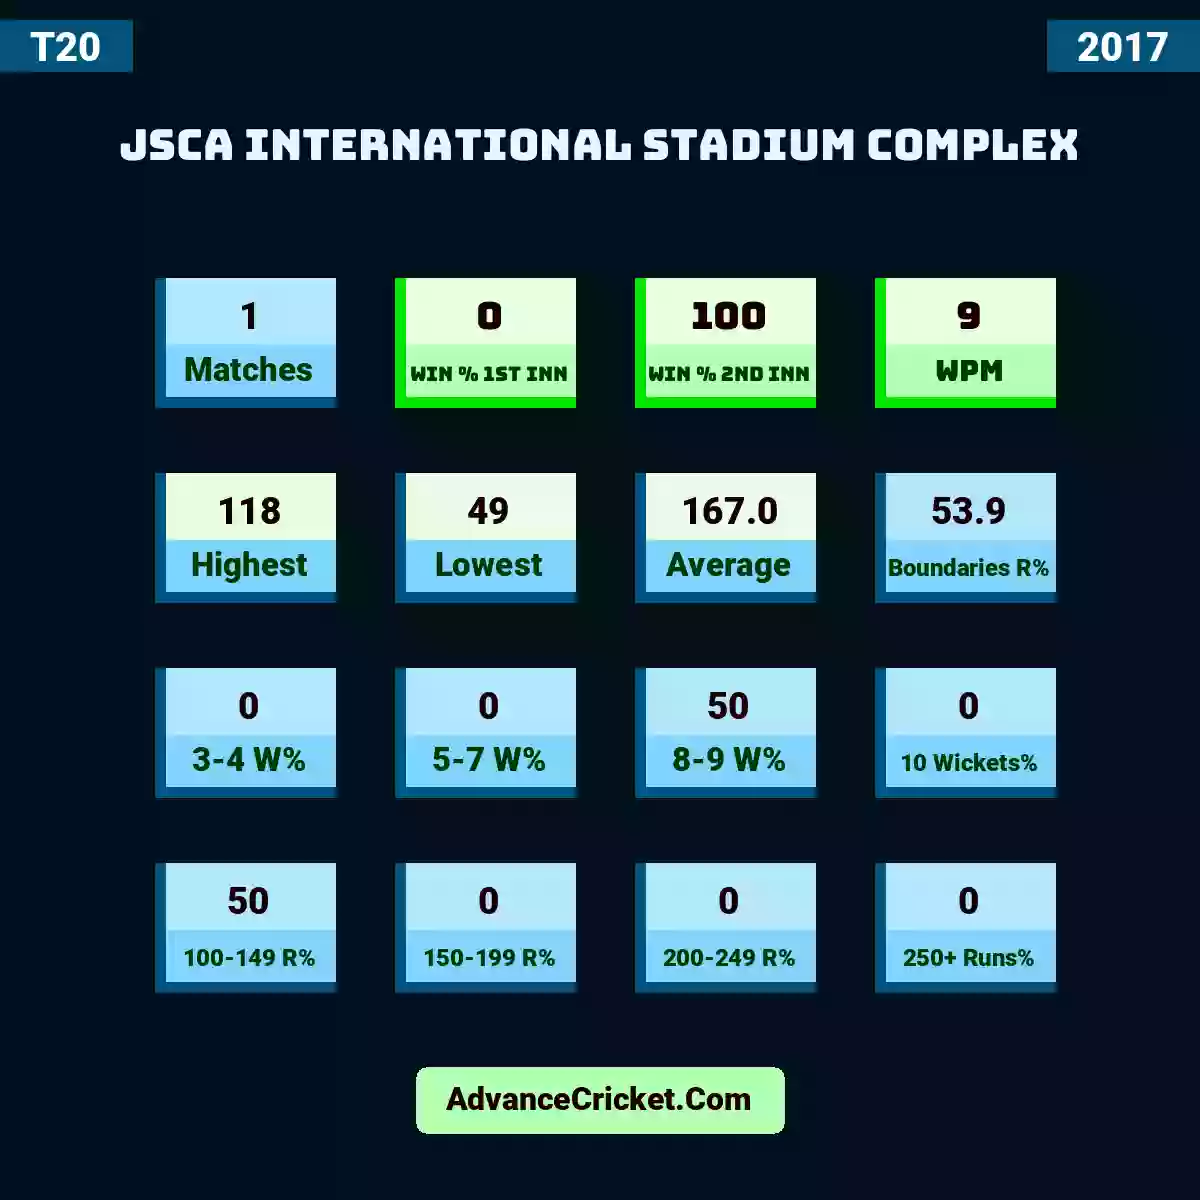 Image showing JSCA International Stadium Complex with Matches: 1, Win % 1st Inn: 0, Win % 2nd Inn: 100, WPM: 9, Highest: 118, Lowest: 49, Average: 167.0, Boundaries R%: 53.9, 3-4 W%: 0, 5-7 W%: 0, 8-9 W%: 50, 10 Wickets%: 0, 100-149 R%: 50, 150-199 R%: 0, 200-249 R%: 0, 250+ Runs%: 0.